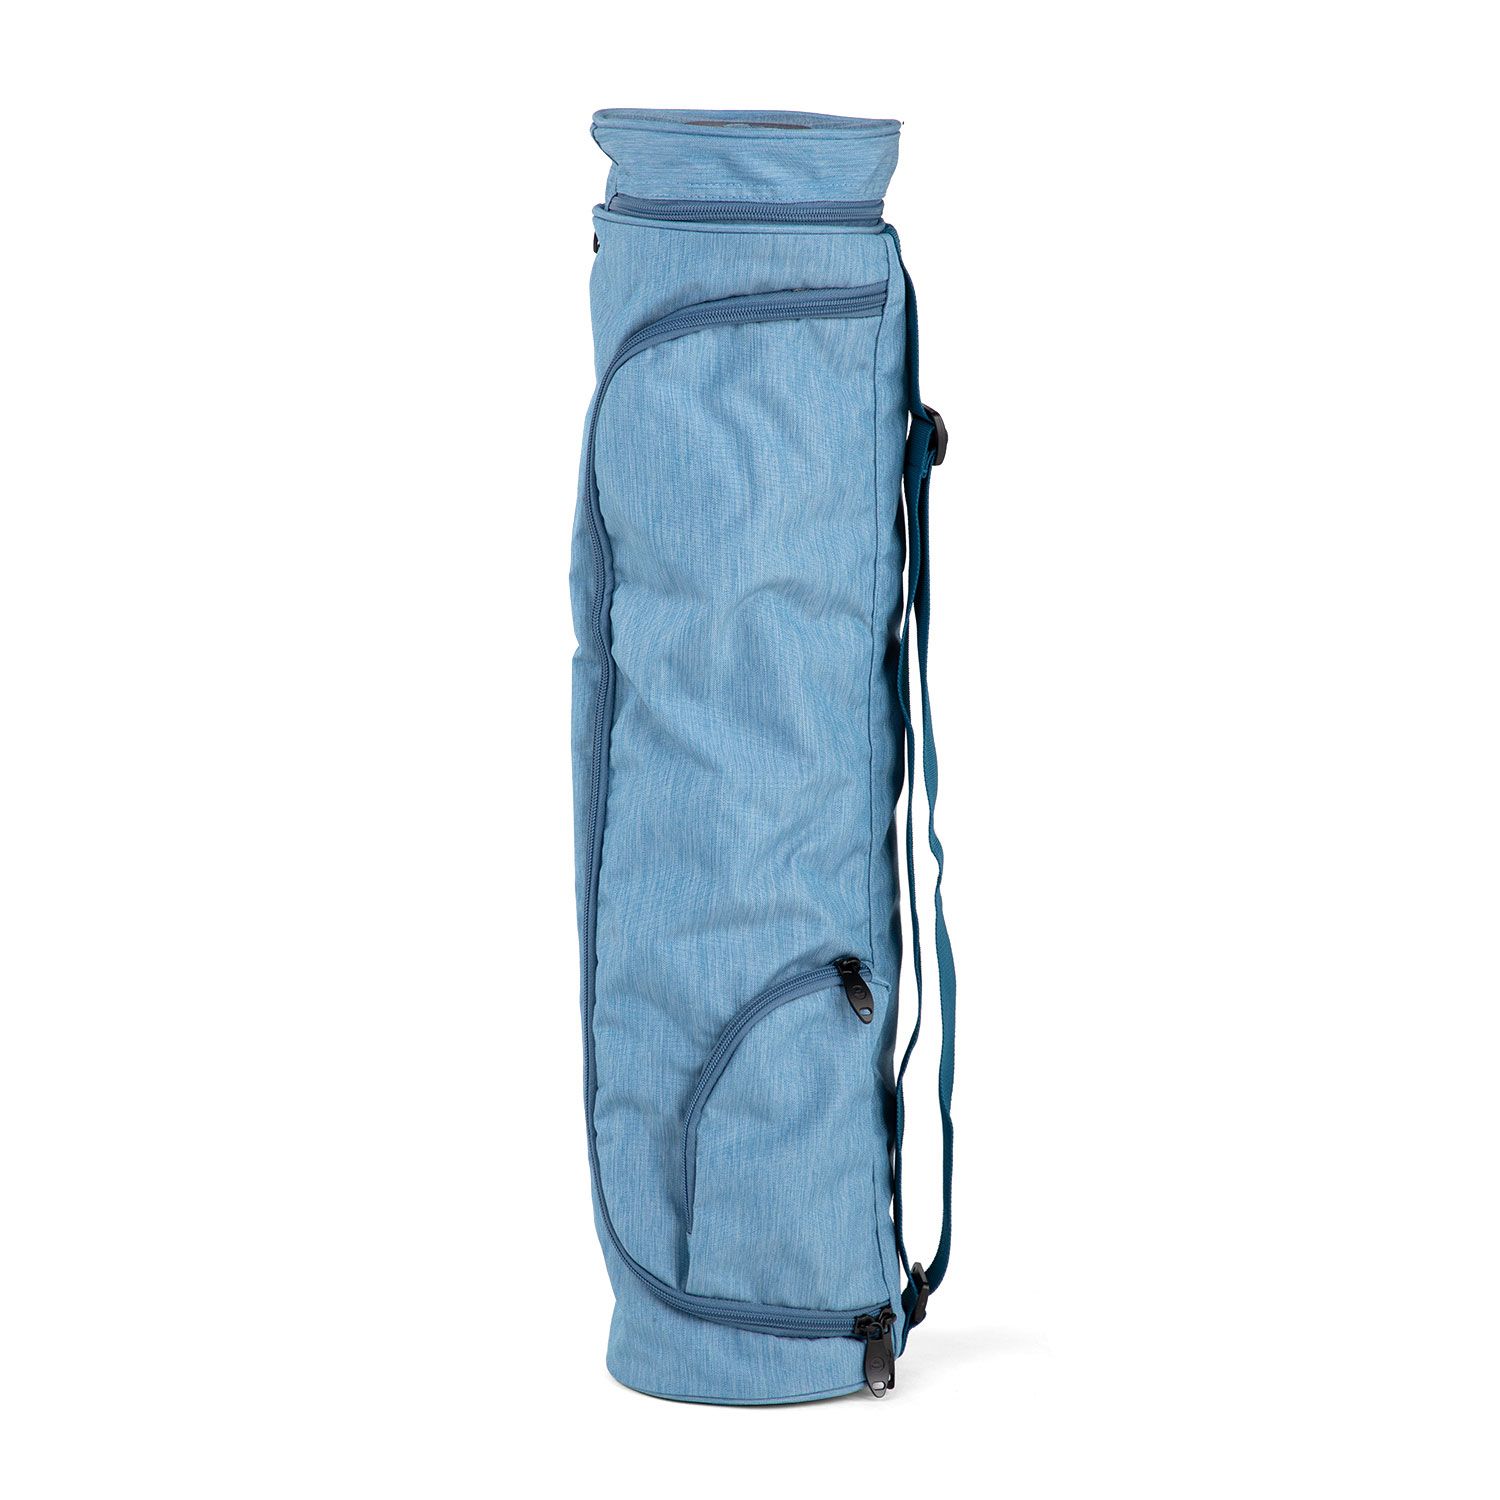 Yogamatten Tasche Asana Bag 60 graublau meliert, Polyester/Polyamide bestickt